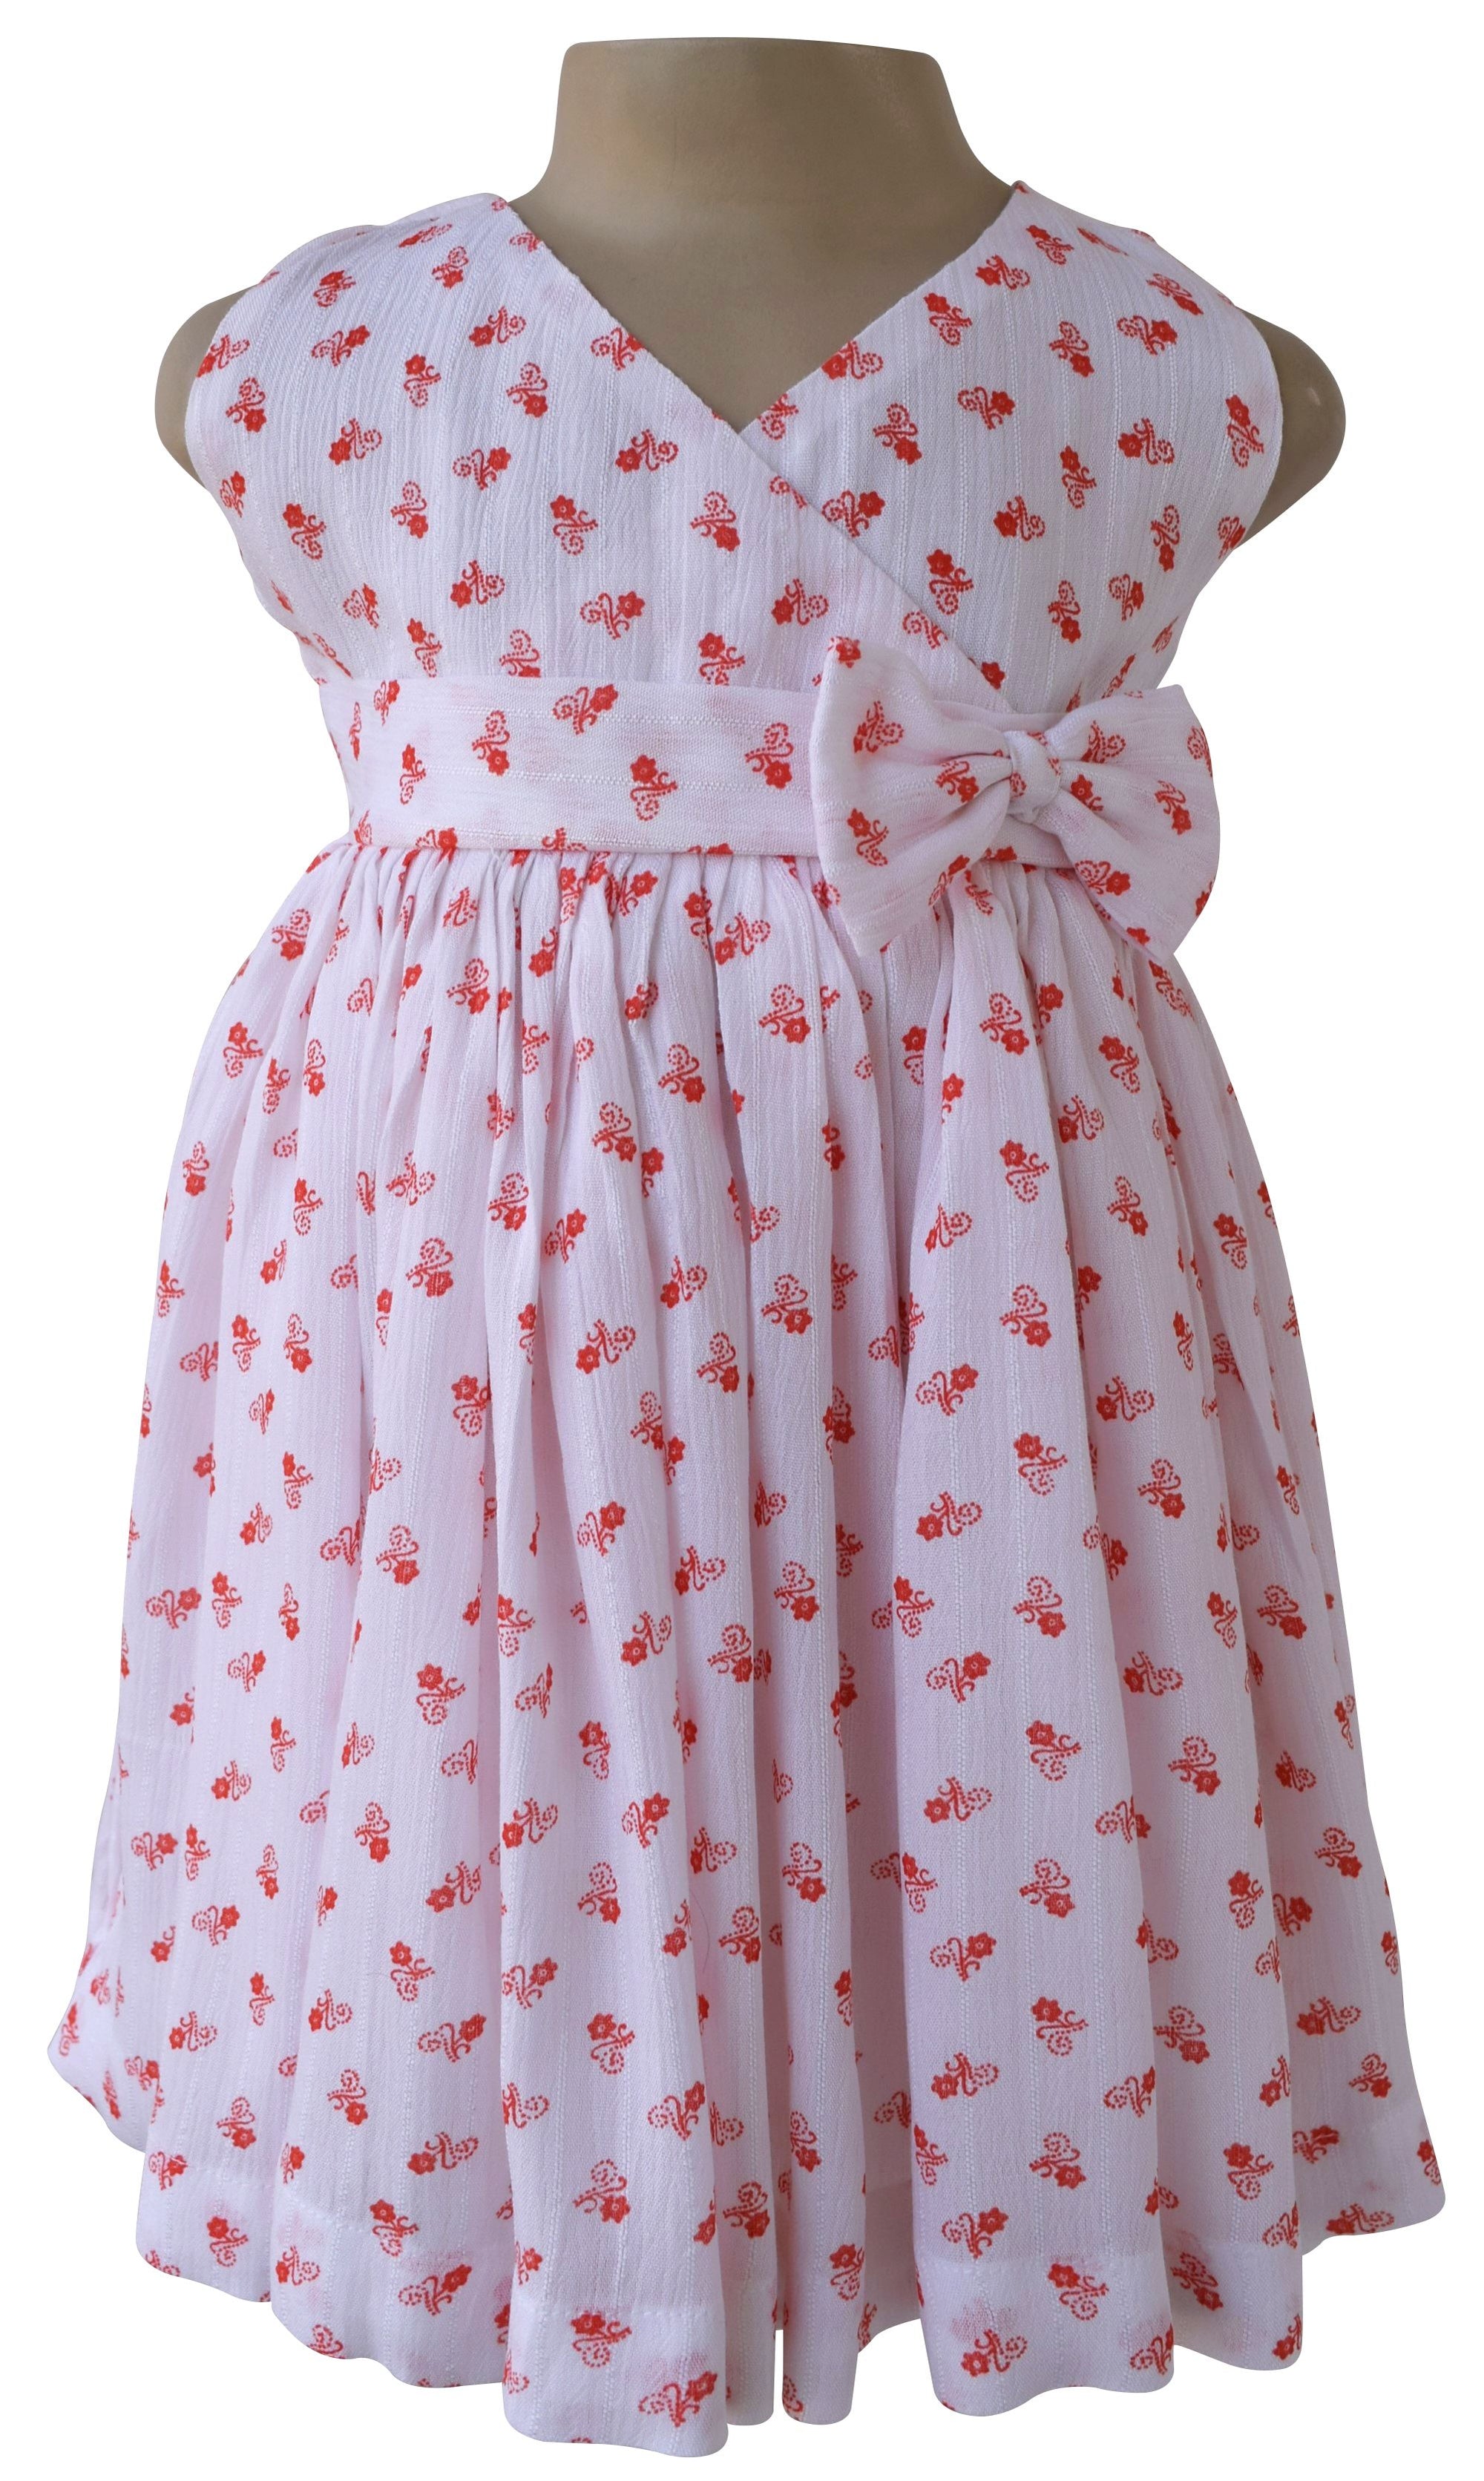 Dress for Kid_Faye Orange Floral Print Dress